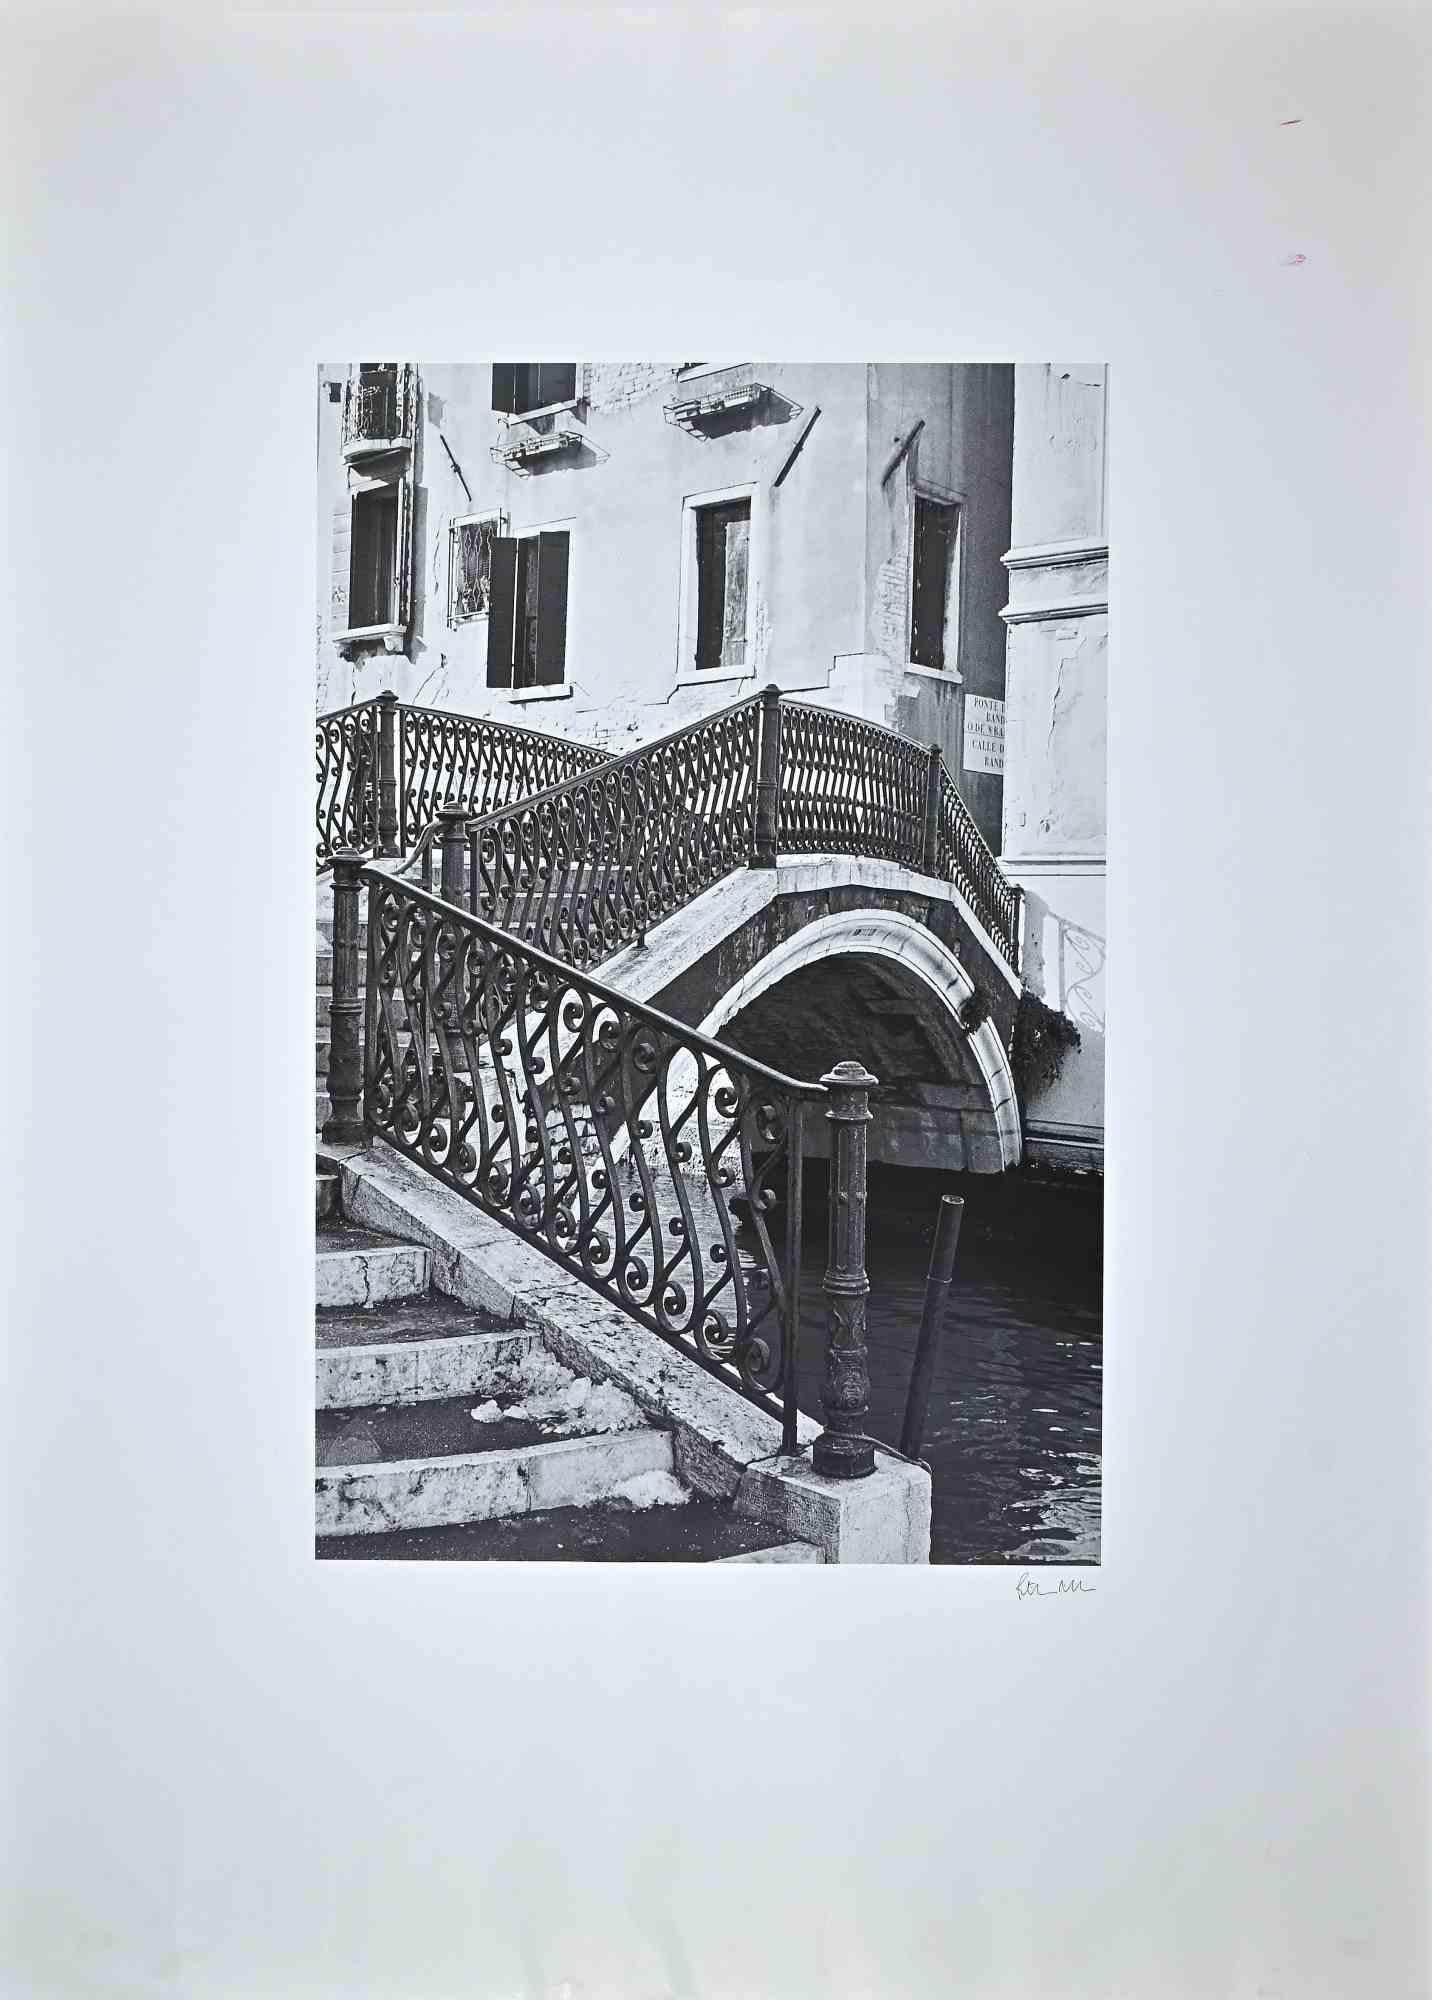 Unknown Landscape Photograph - Venice - Original Photographic Transfer Print - Late 20th century